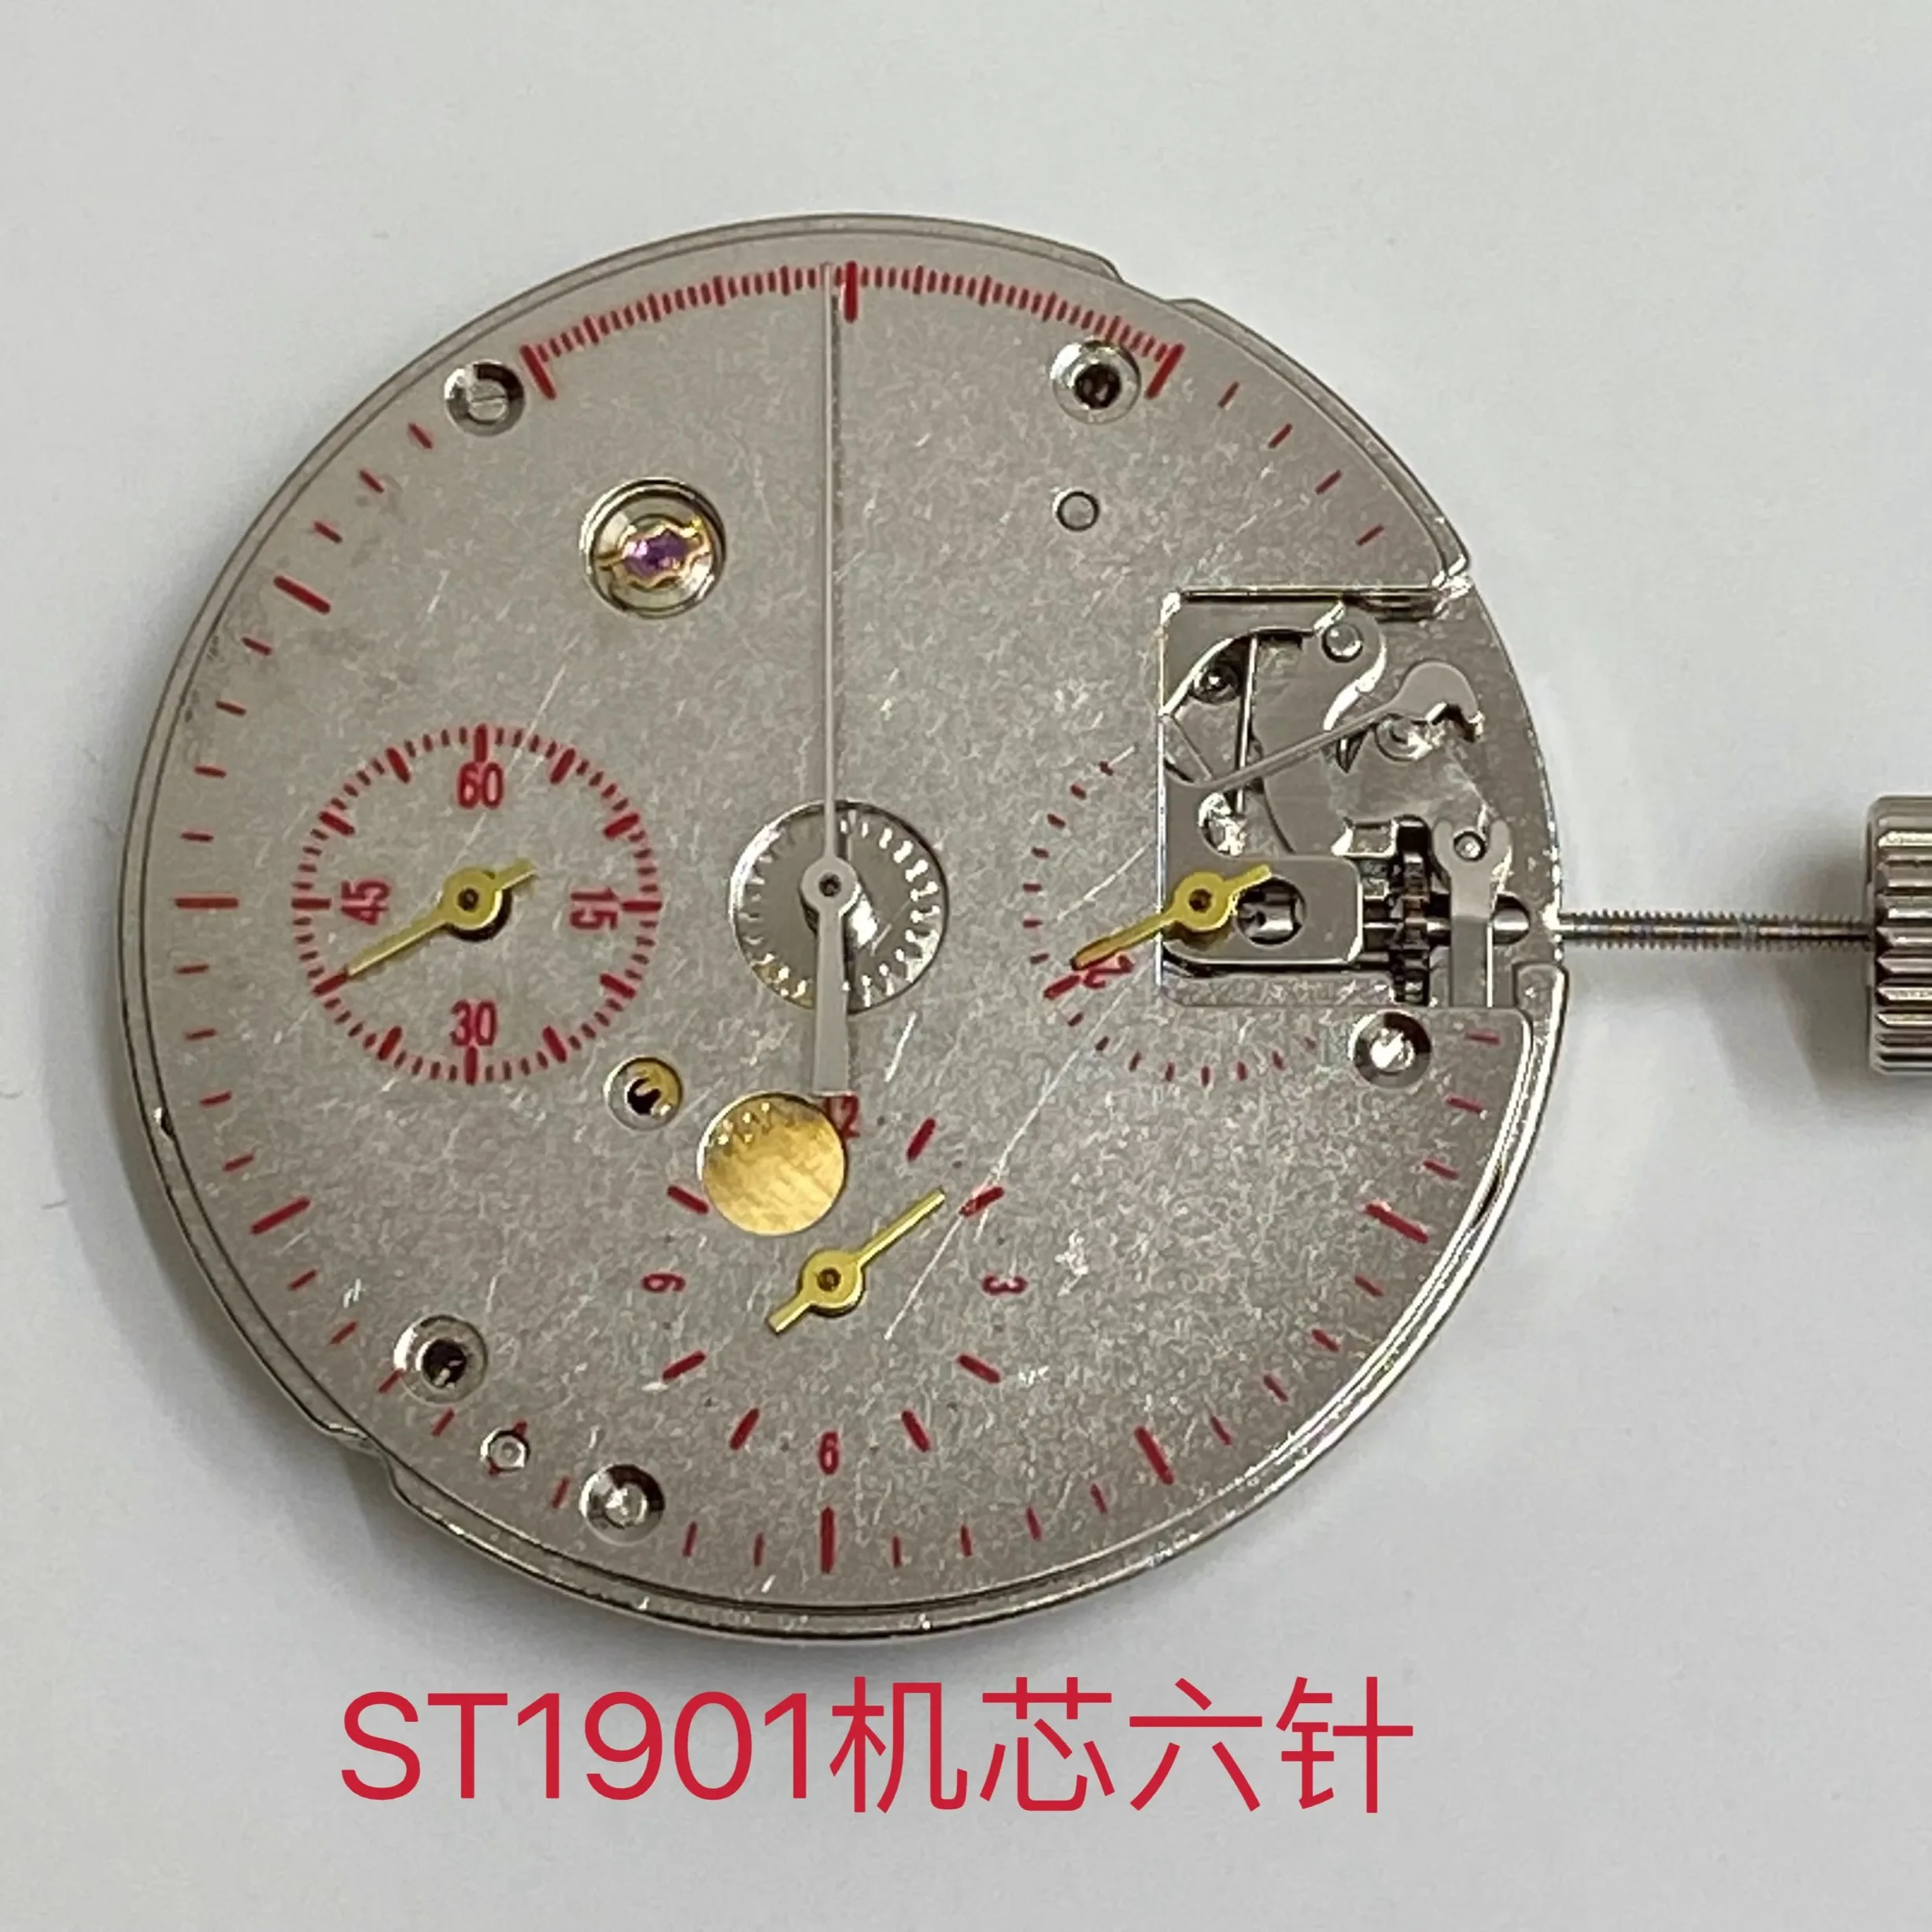 

Seagull ST1901 ST1902 ST1903 movement manual winding mechanical chronograph movement clock men's watch movement repair